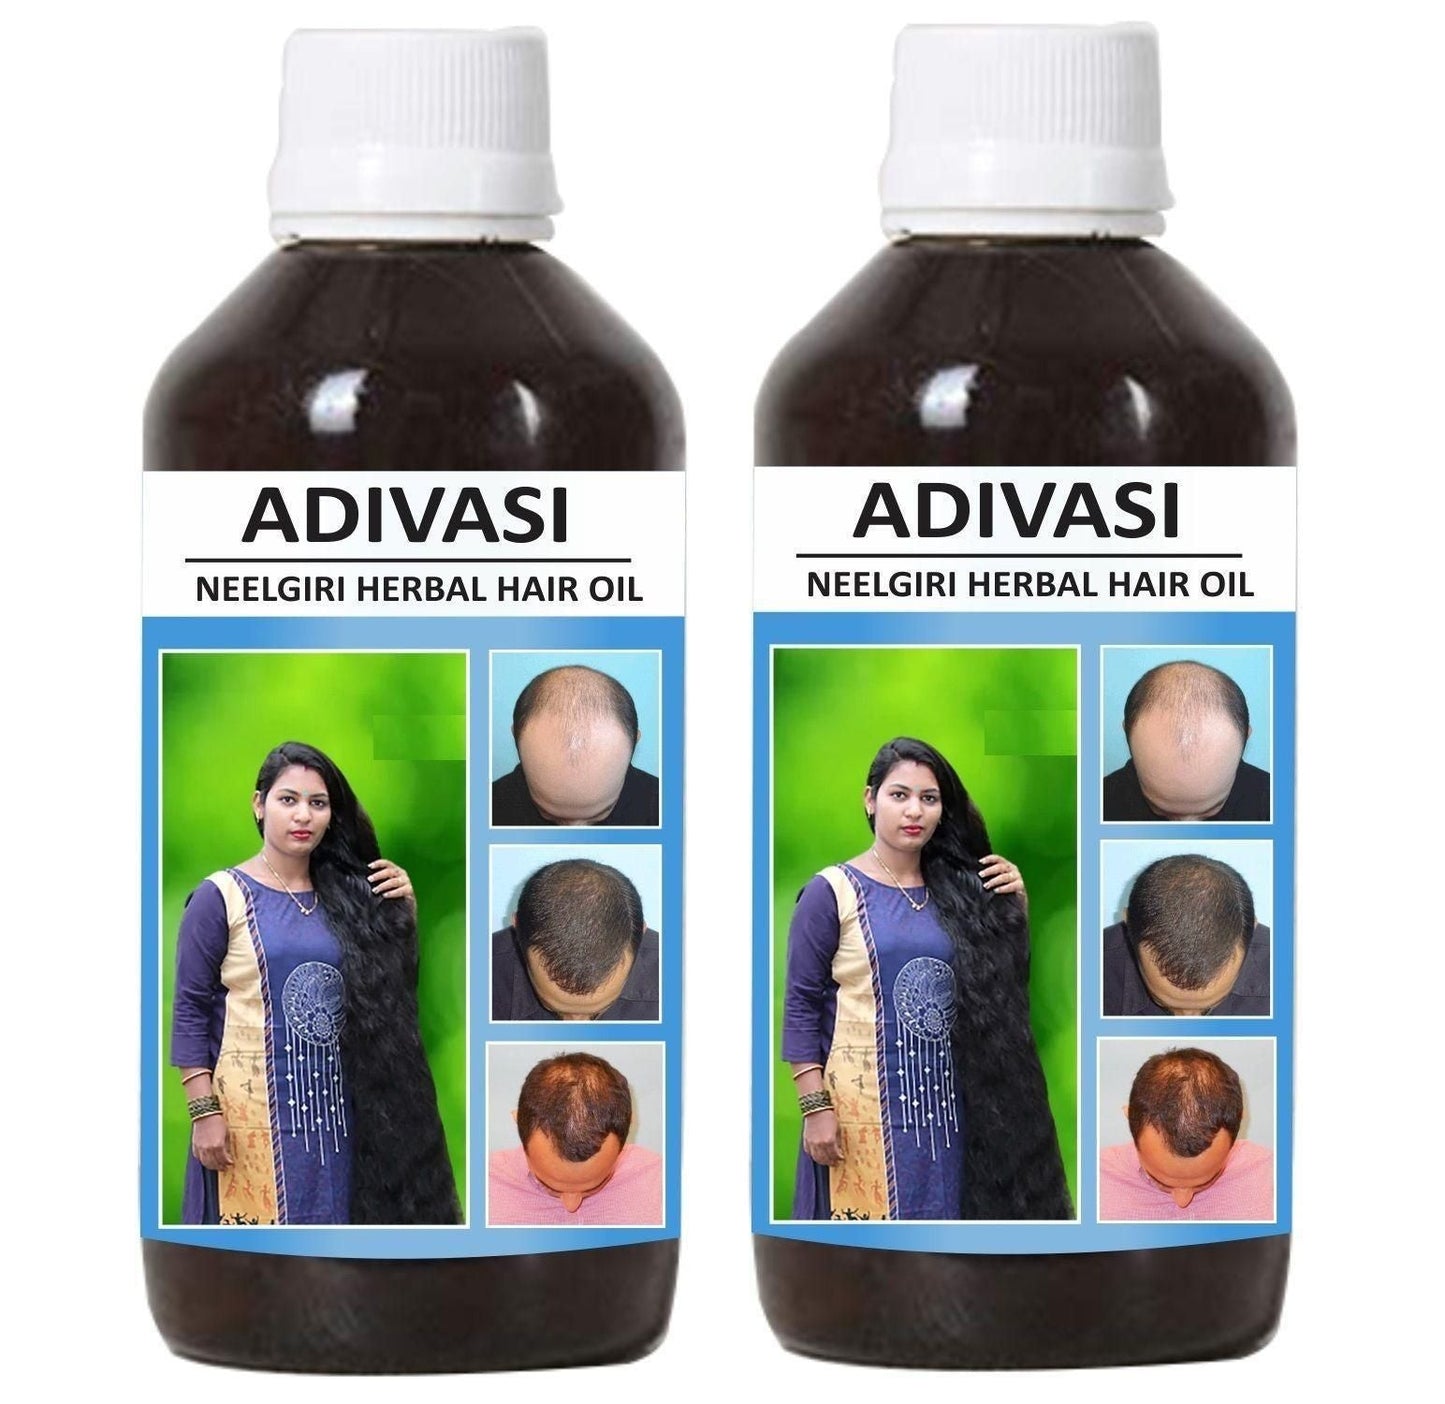 Adivasi Neelgiri Herbal Hair Oill 100ML (Pack of 2) - Deal IND.